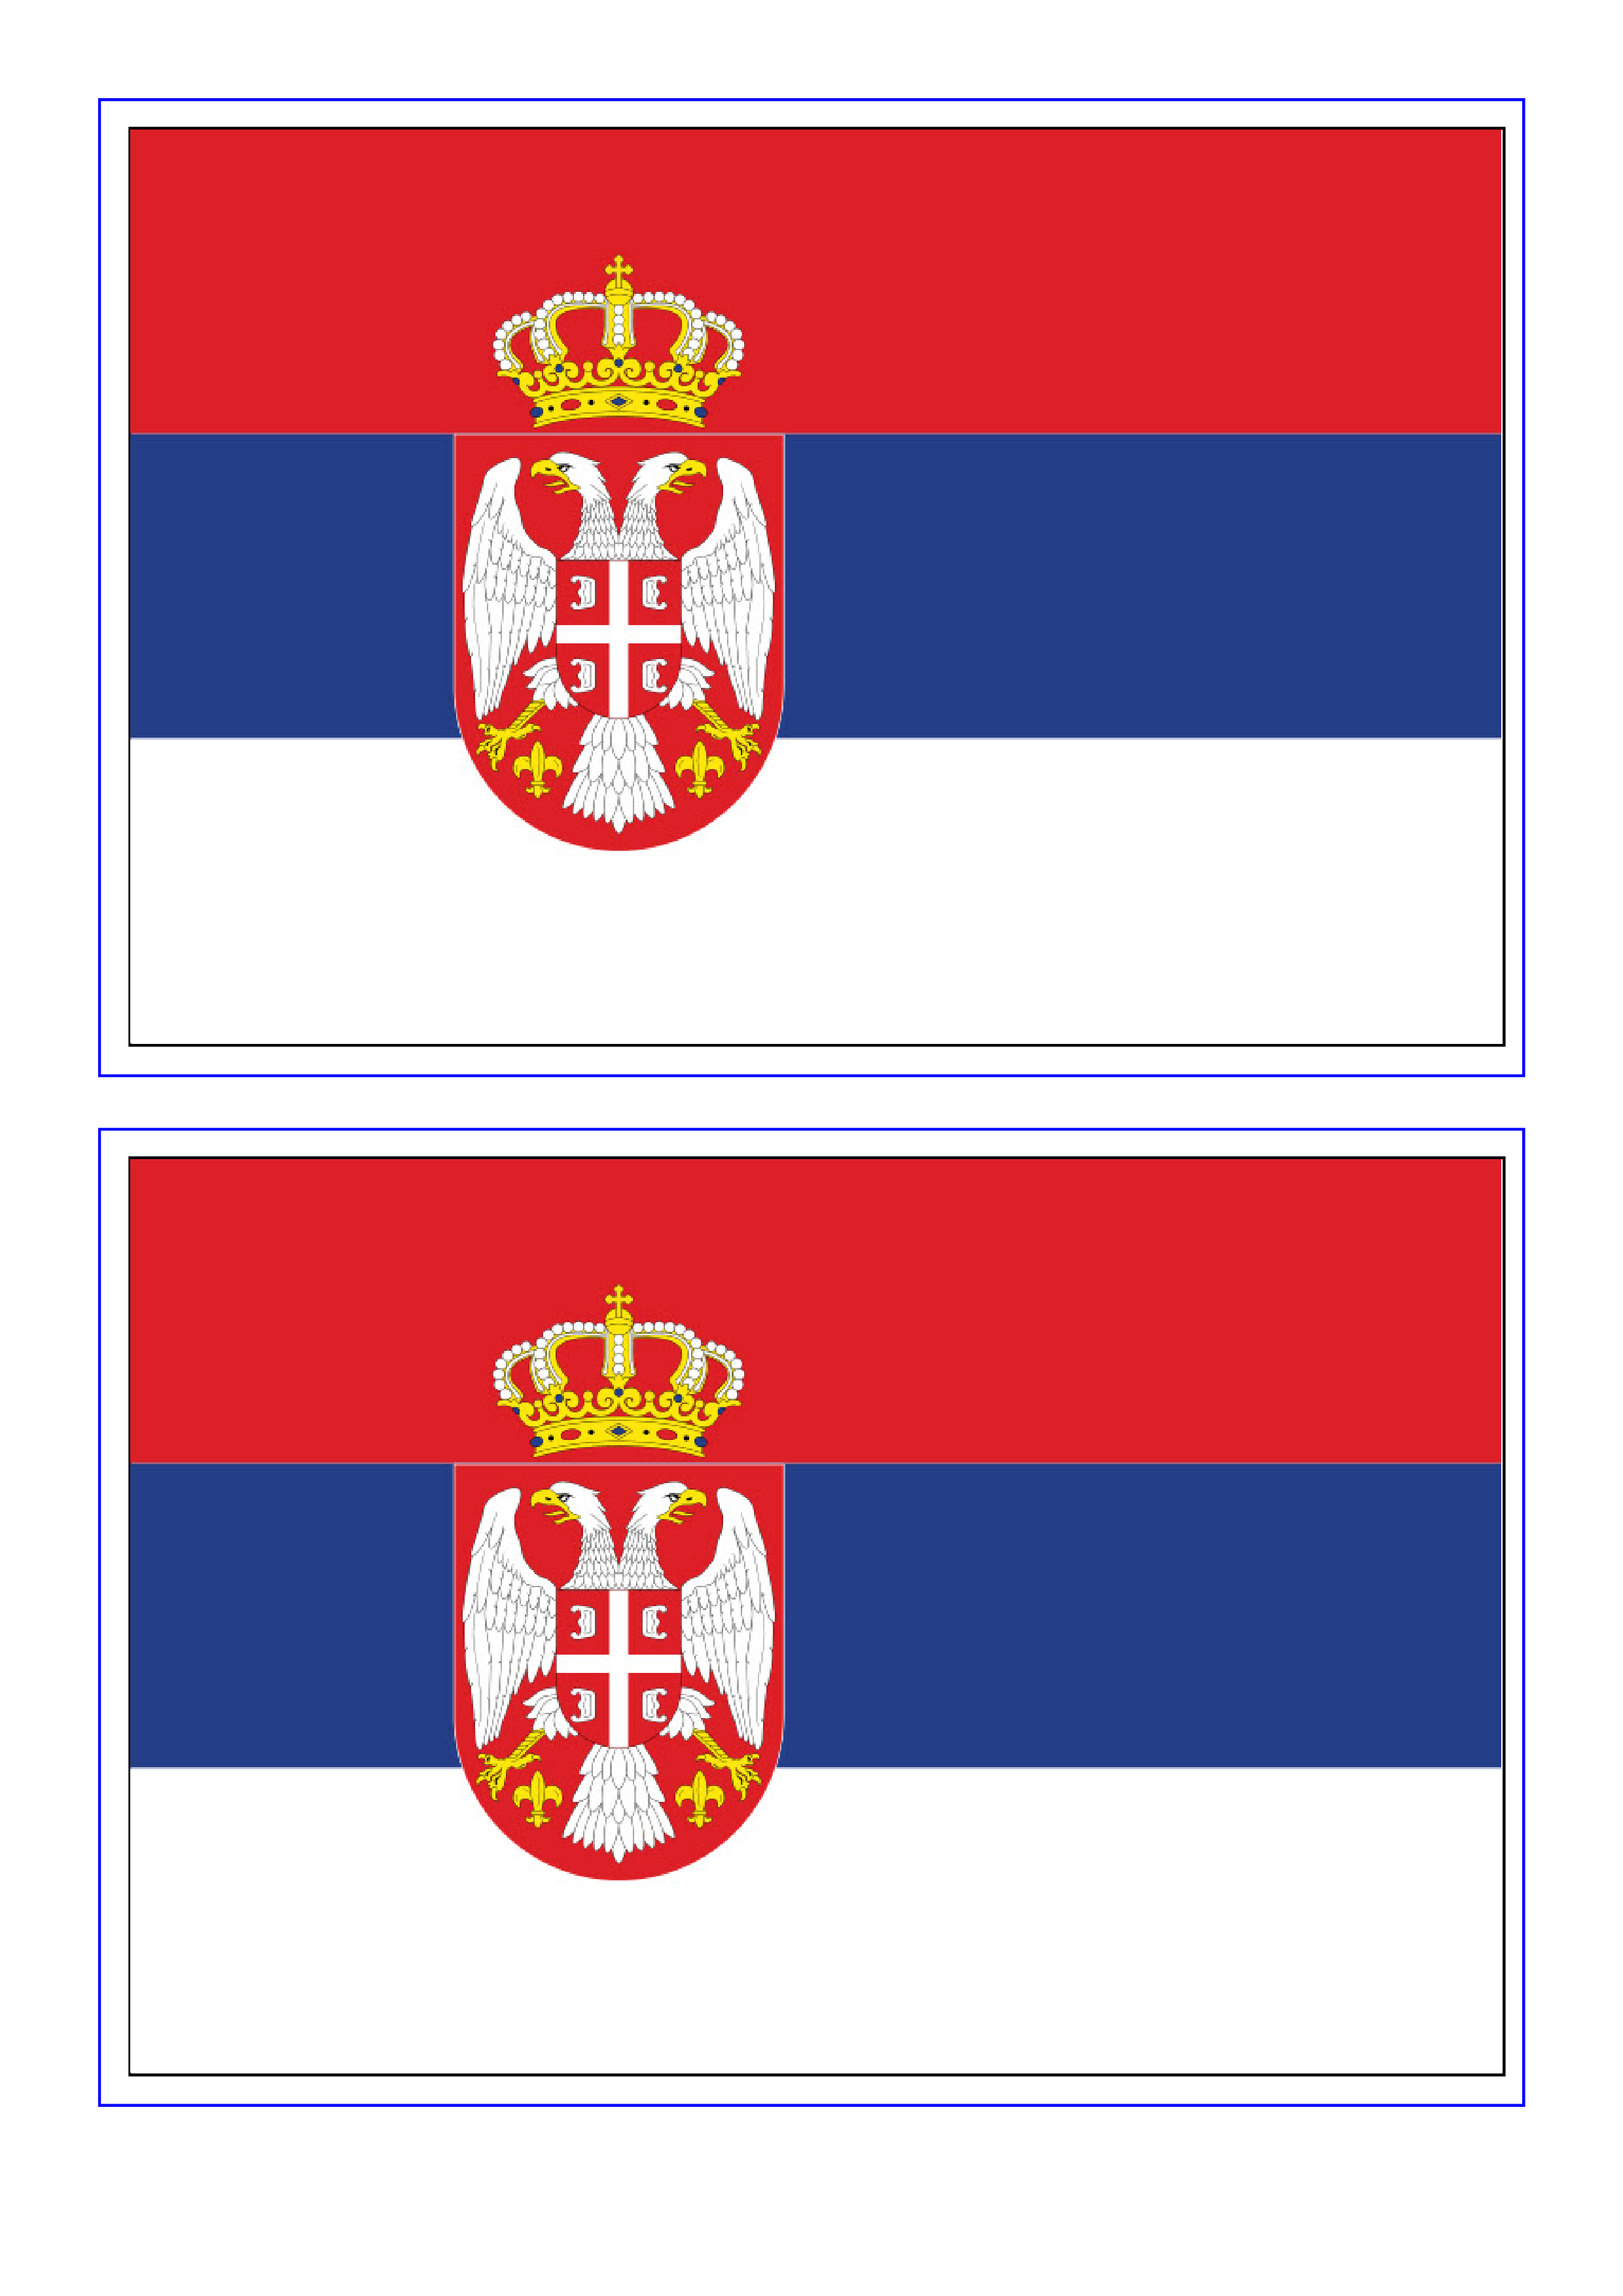 Serbia Flag main image